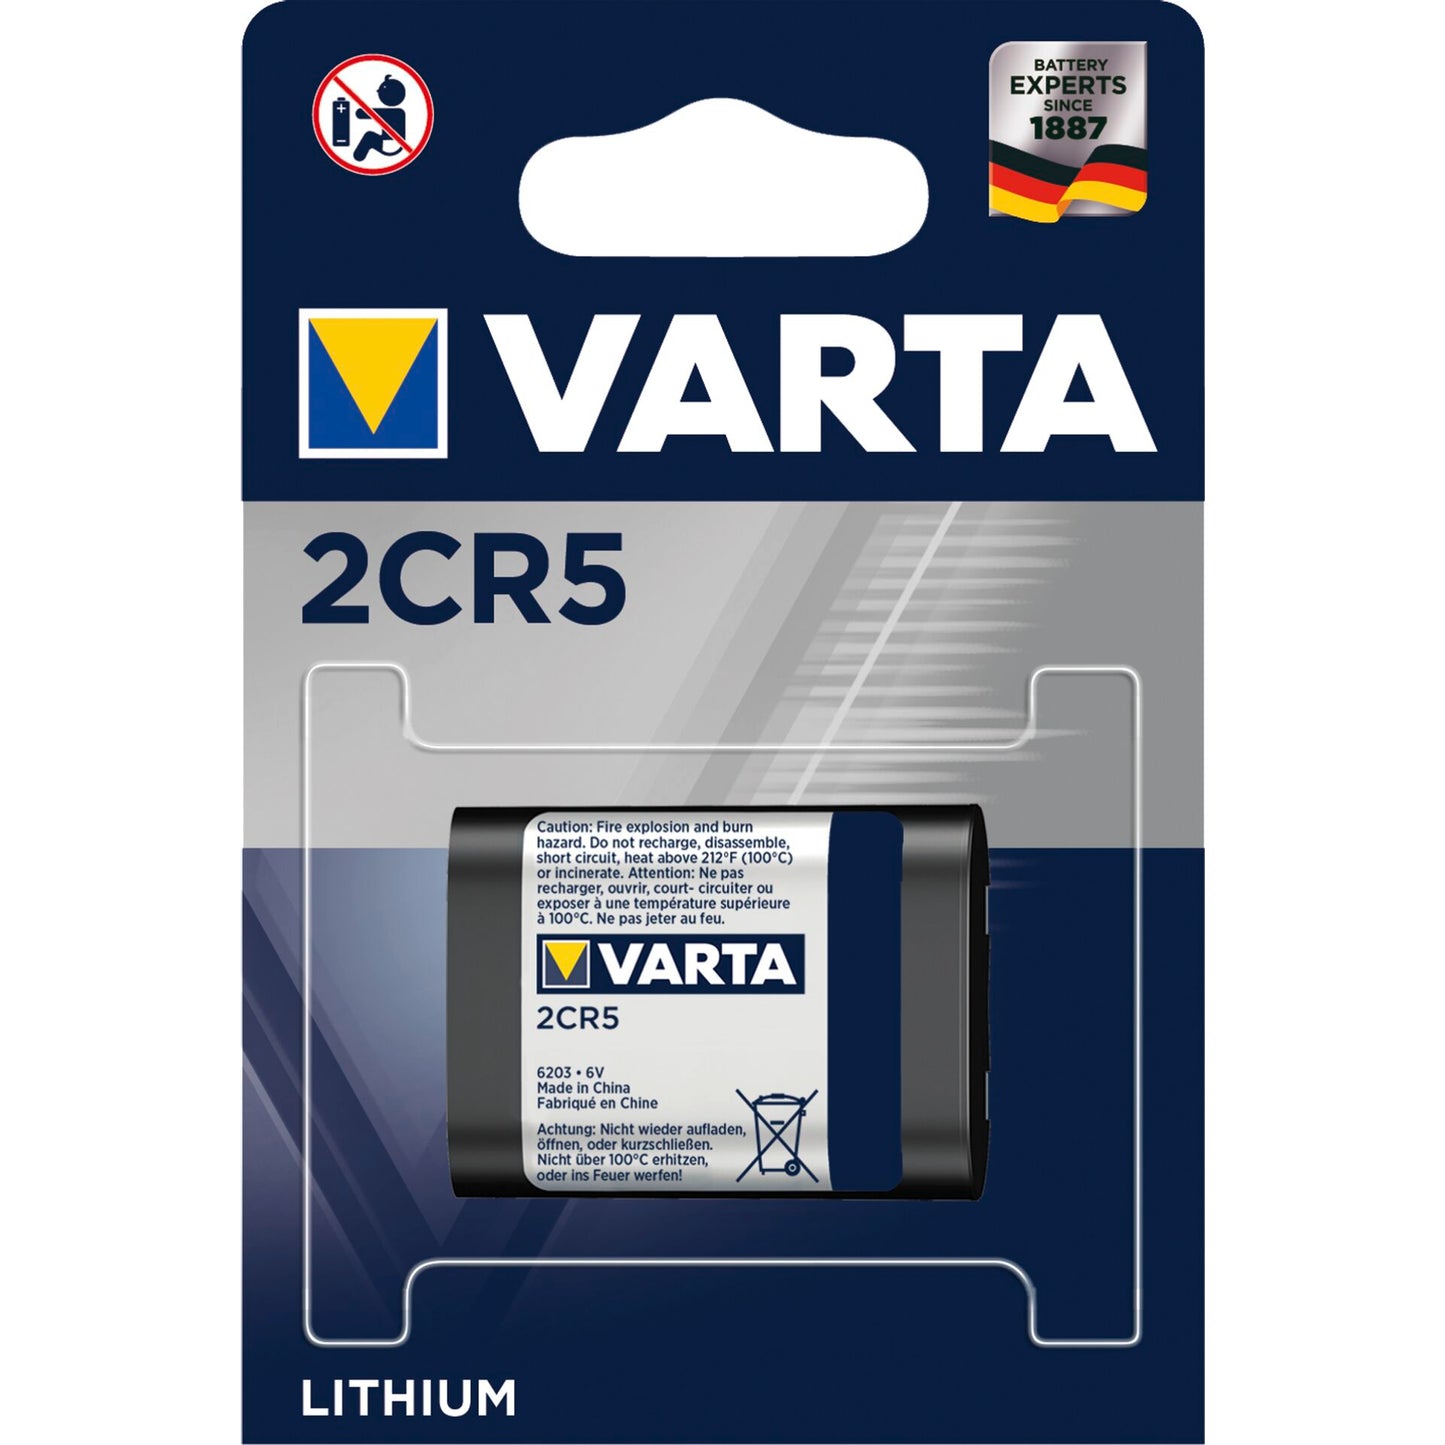 Varta 2CR5 6V Lithium Battery